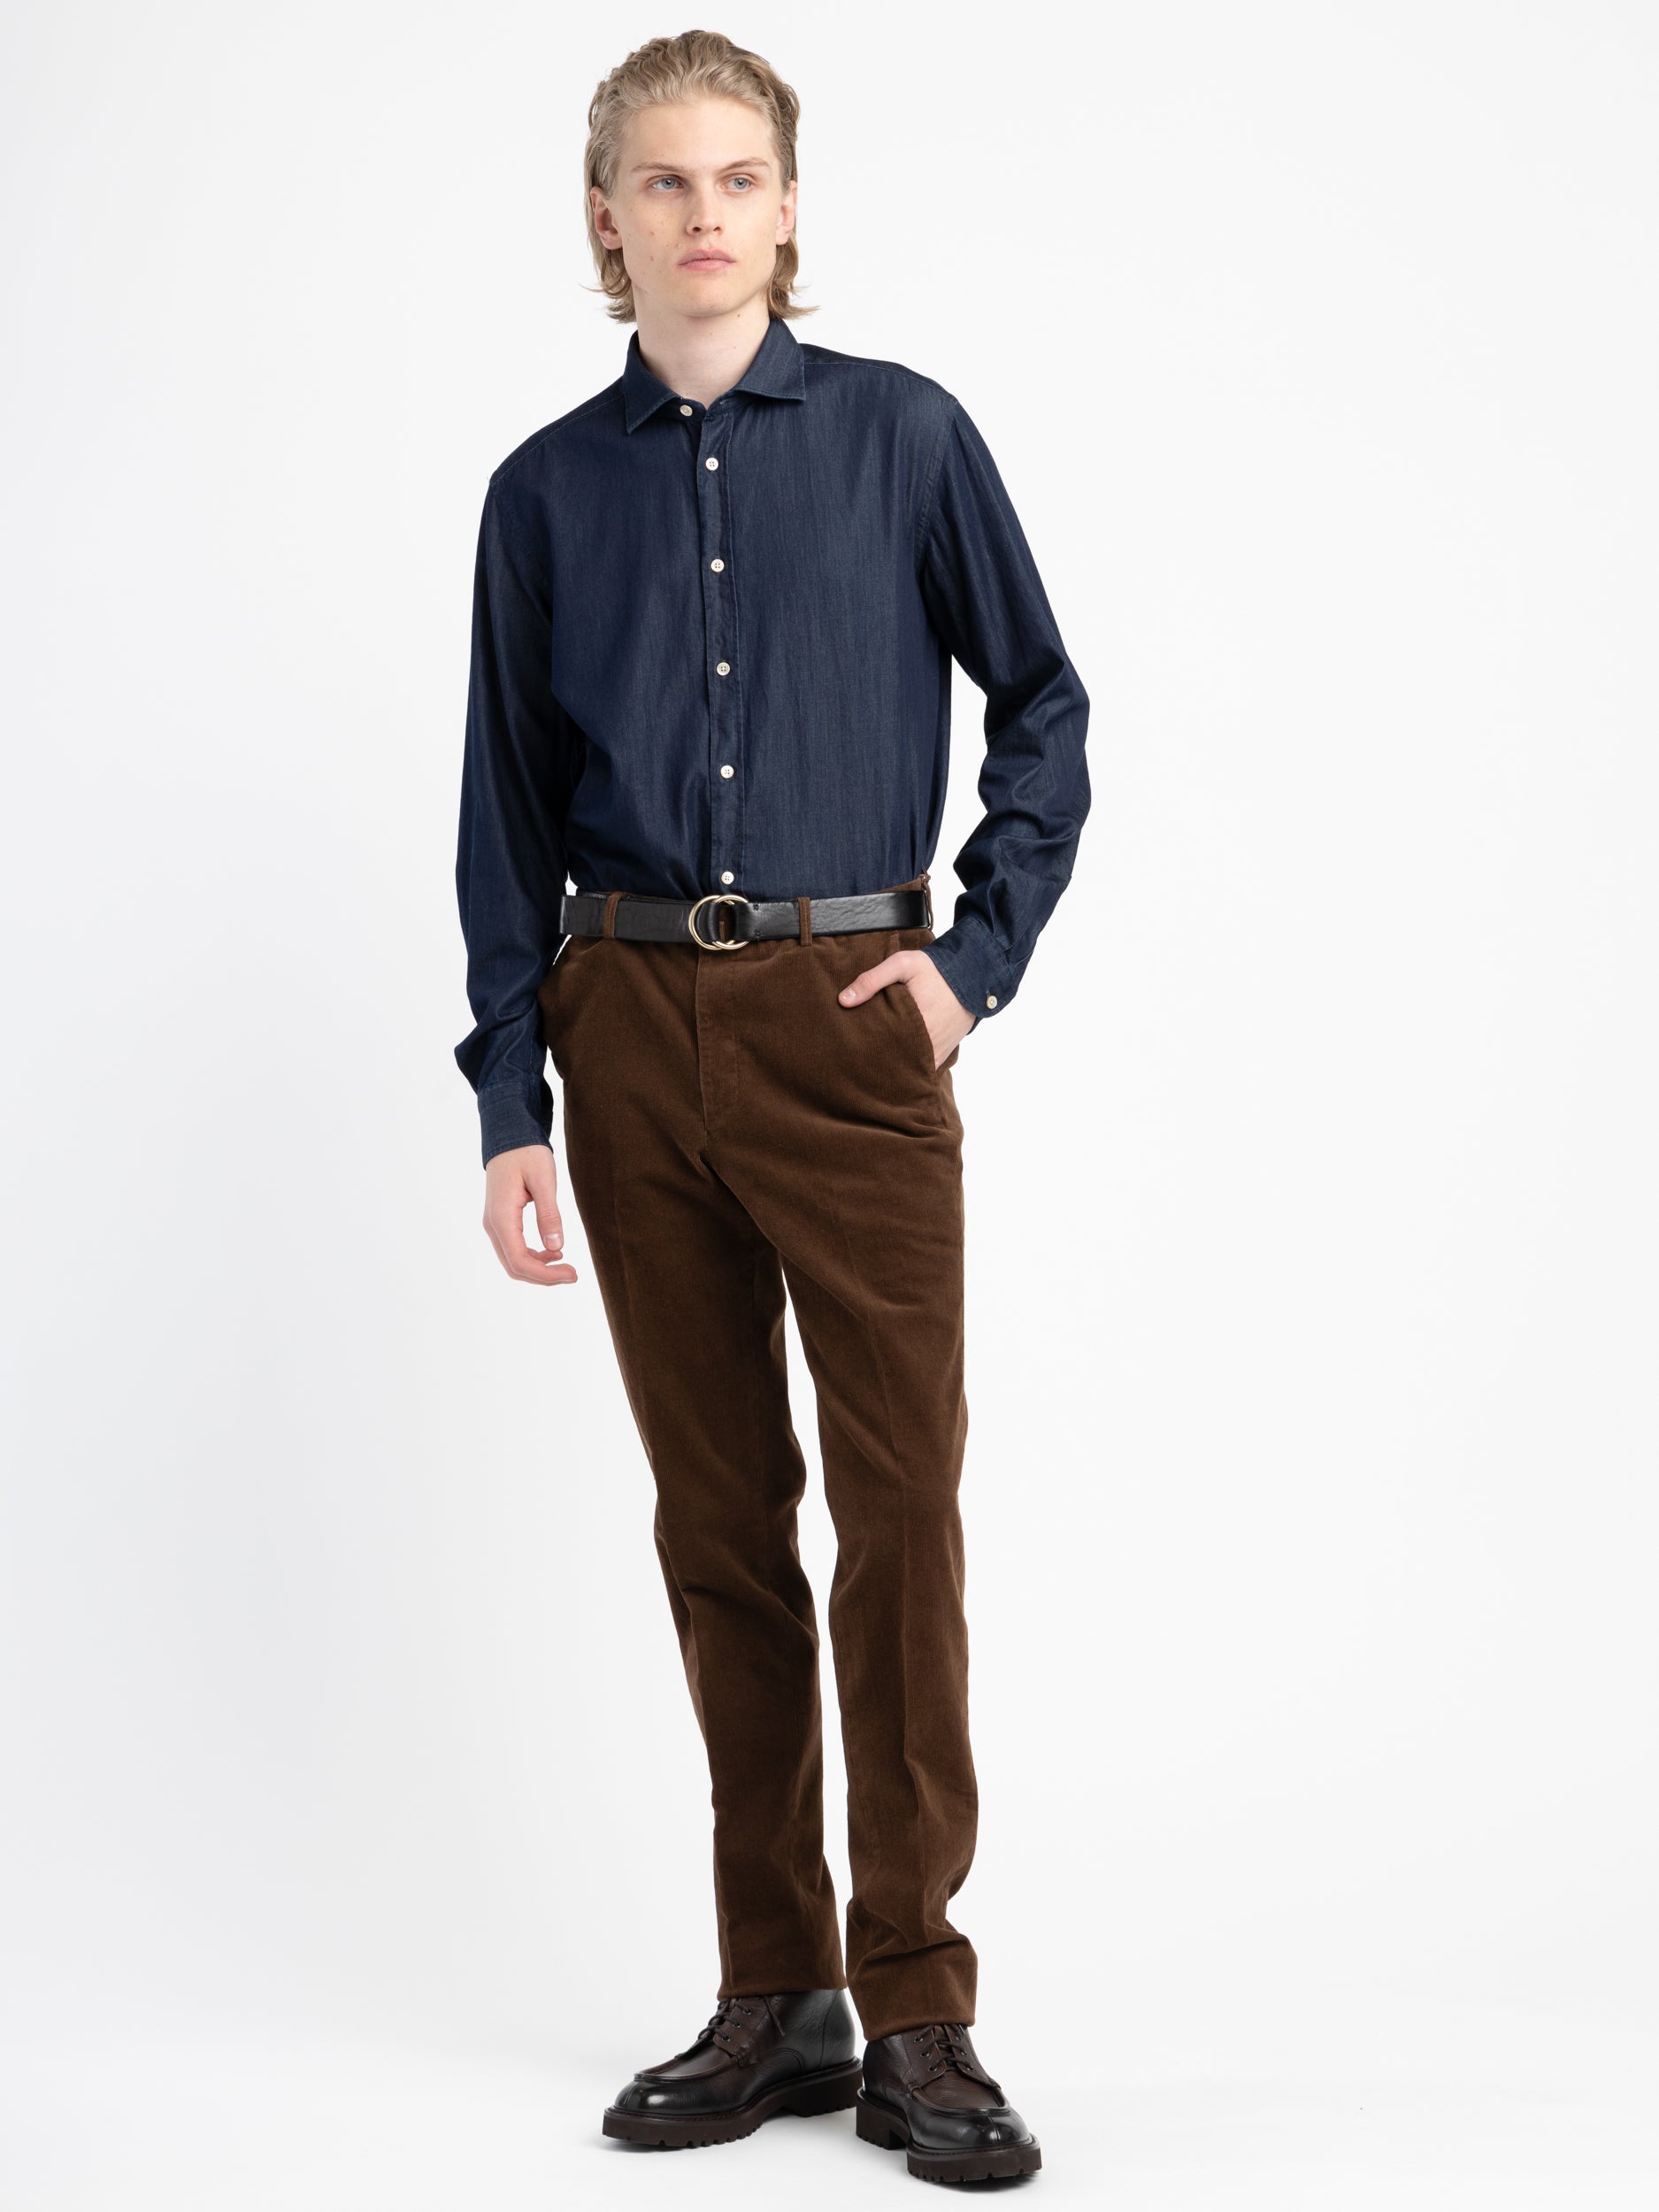 Men's corduroy trousers FBM006-011-02_DK GREY